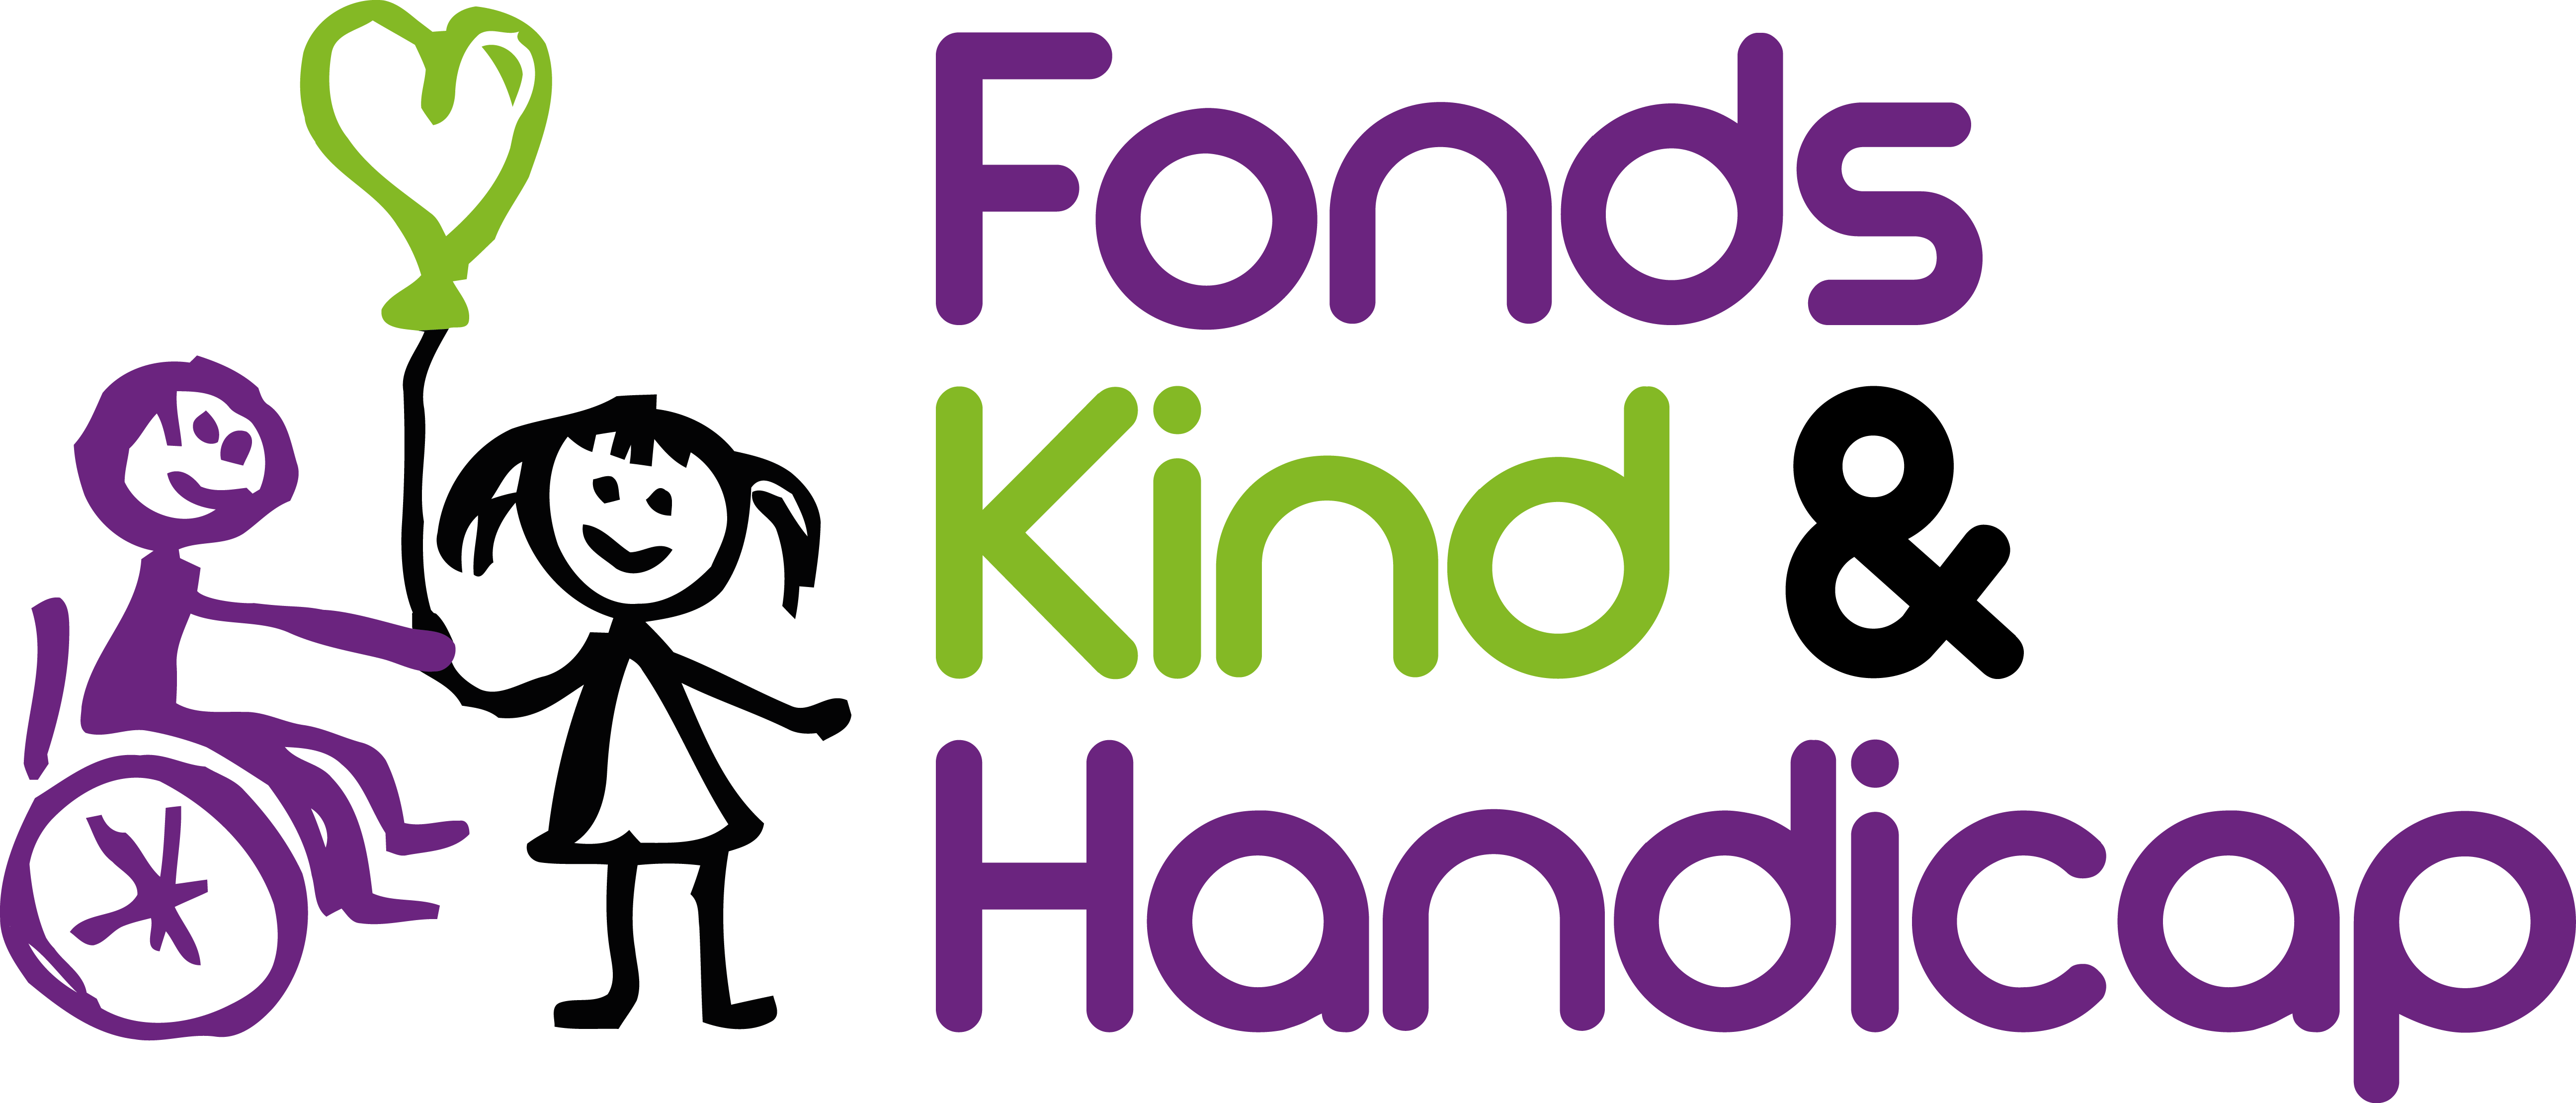 FKH logo colored